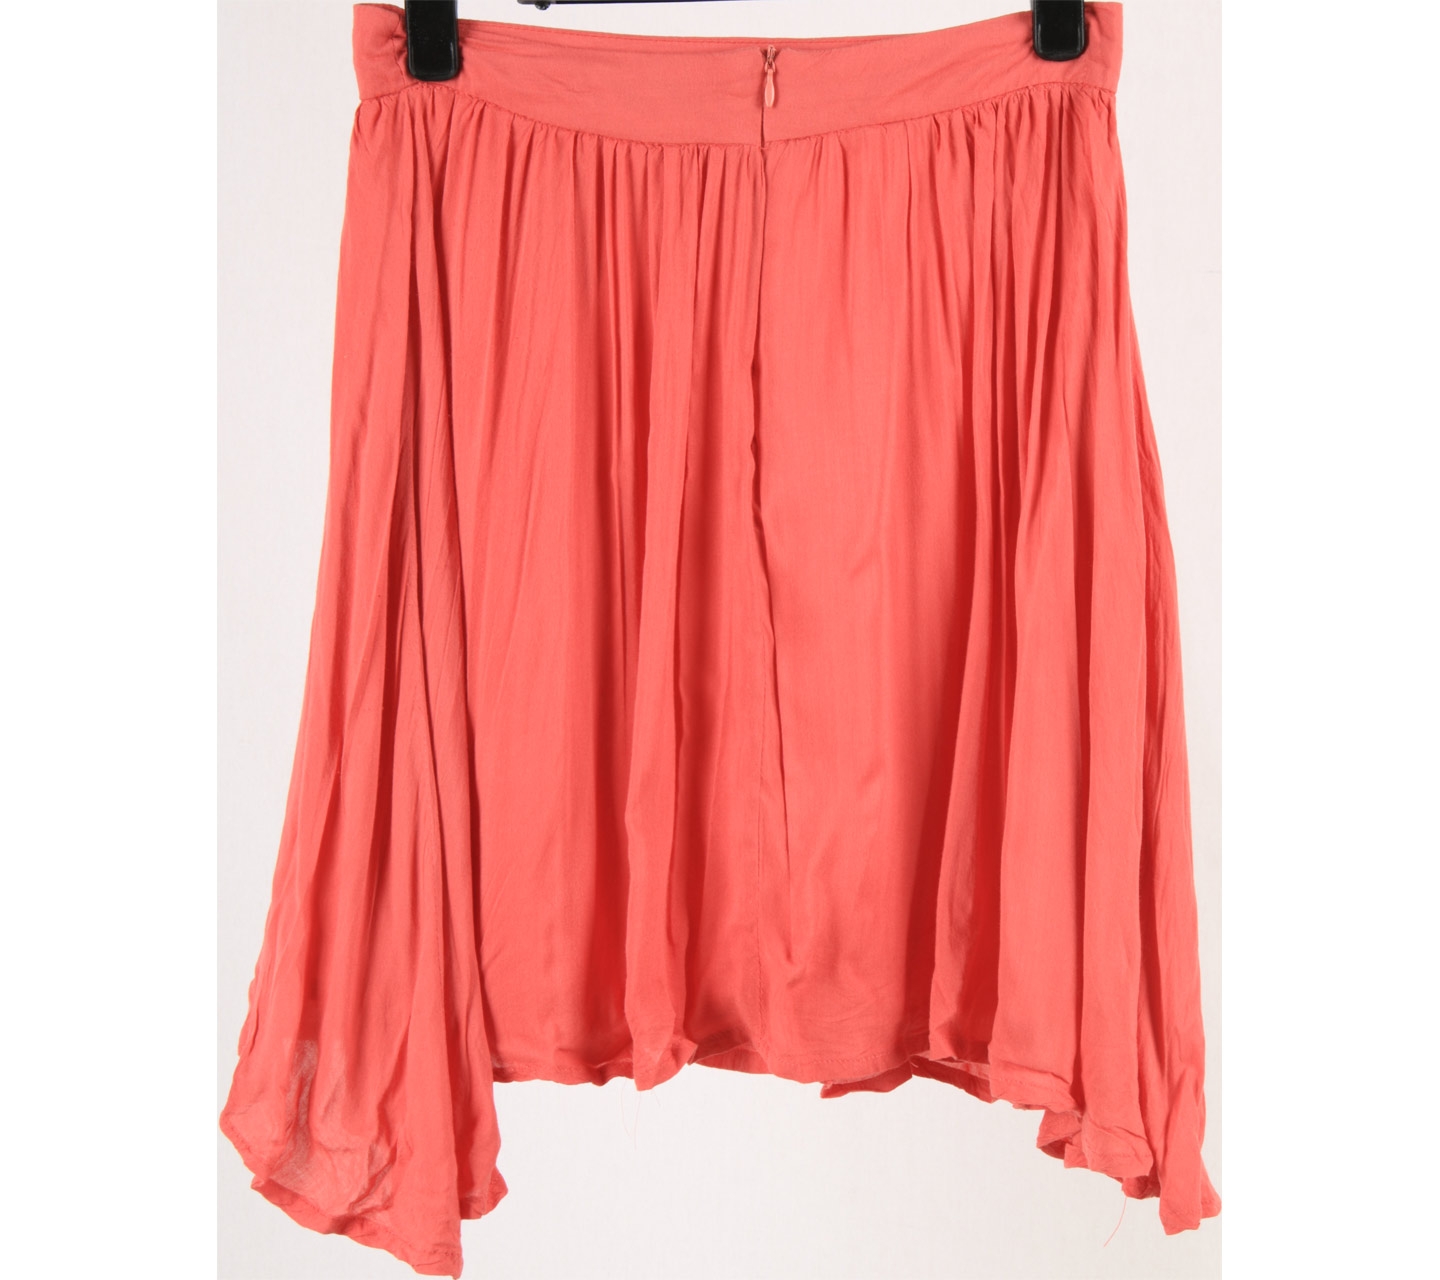 theclosetlover Pink Skirt